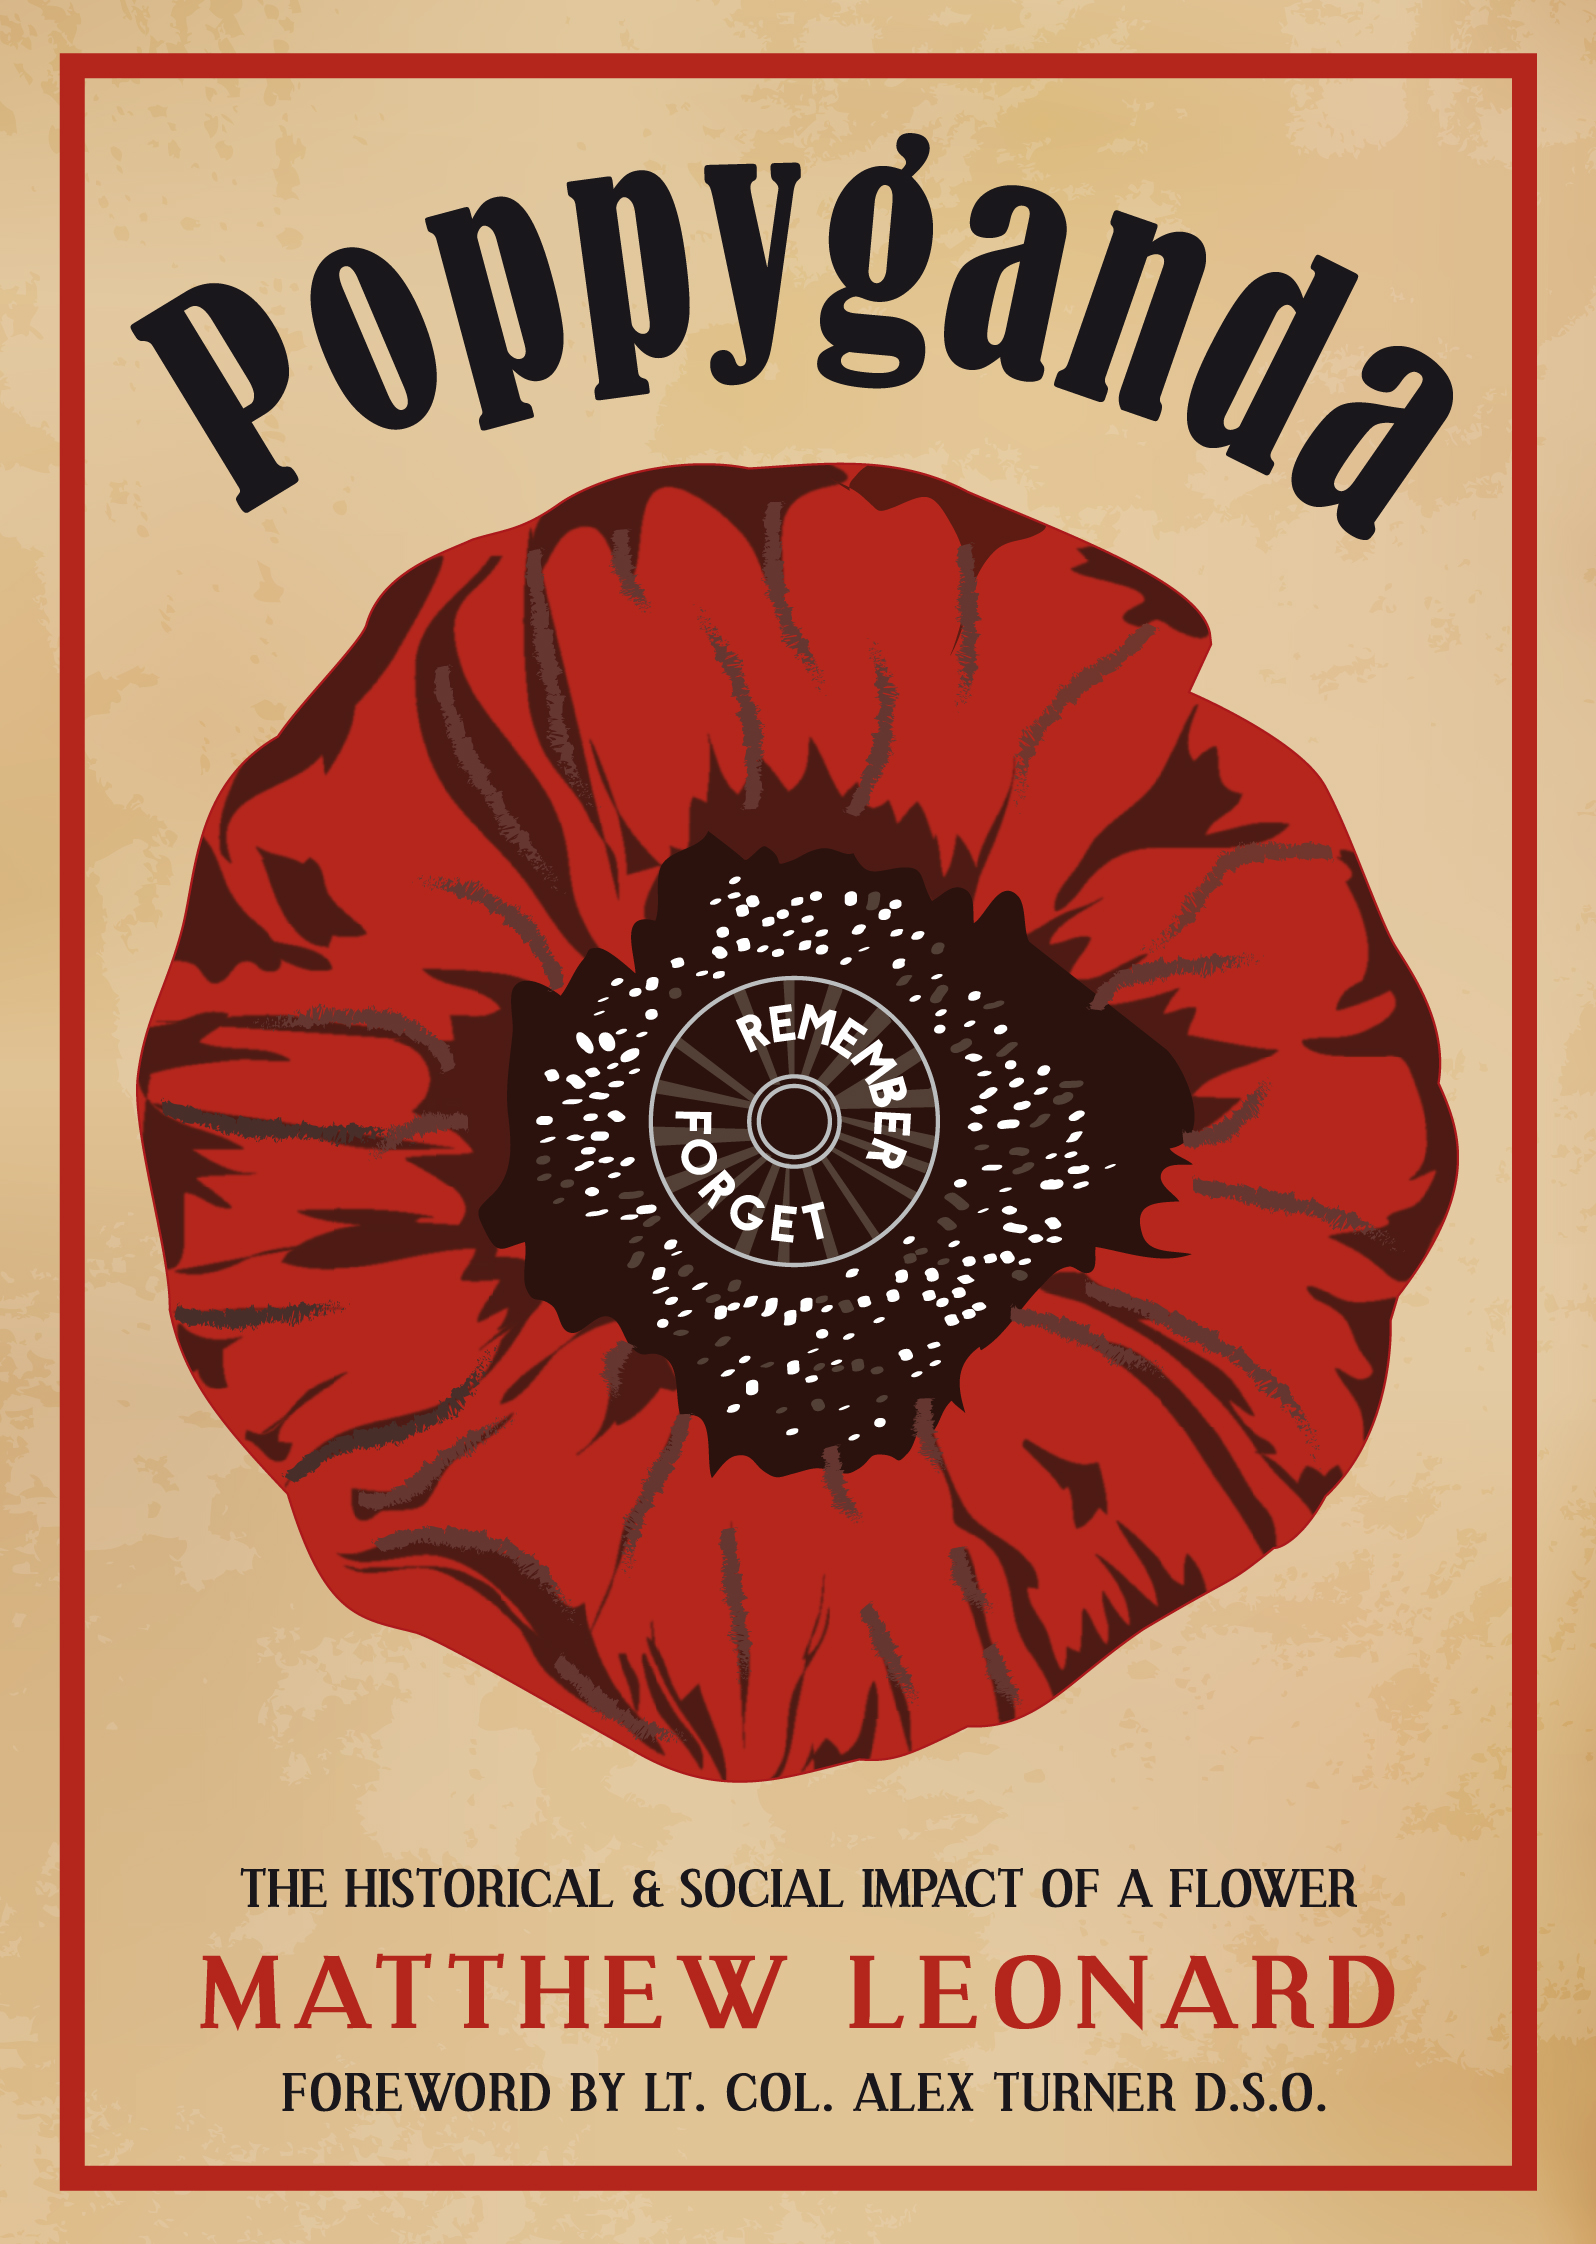 Poppyganda Final Cover